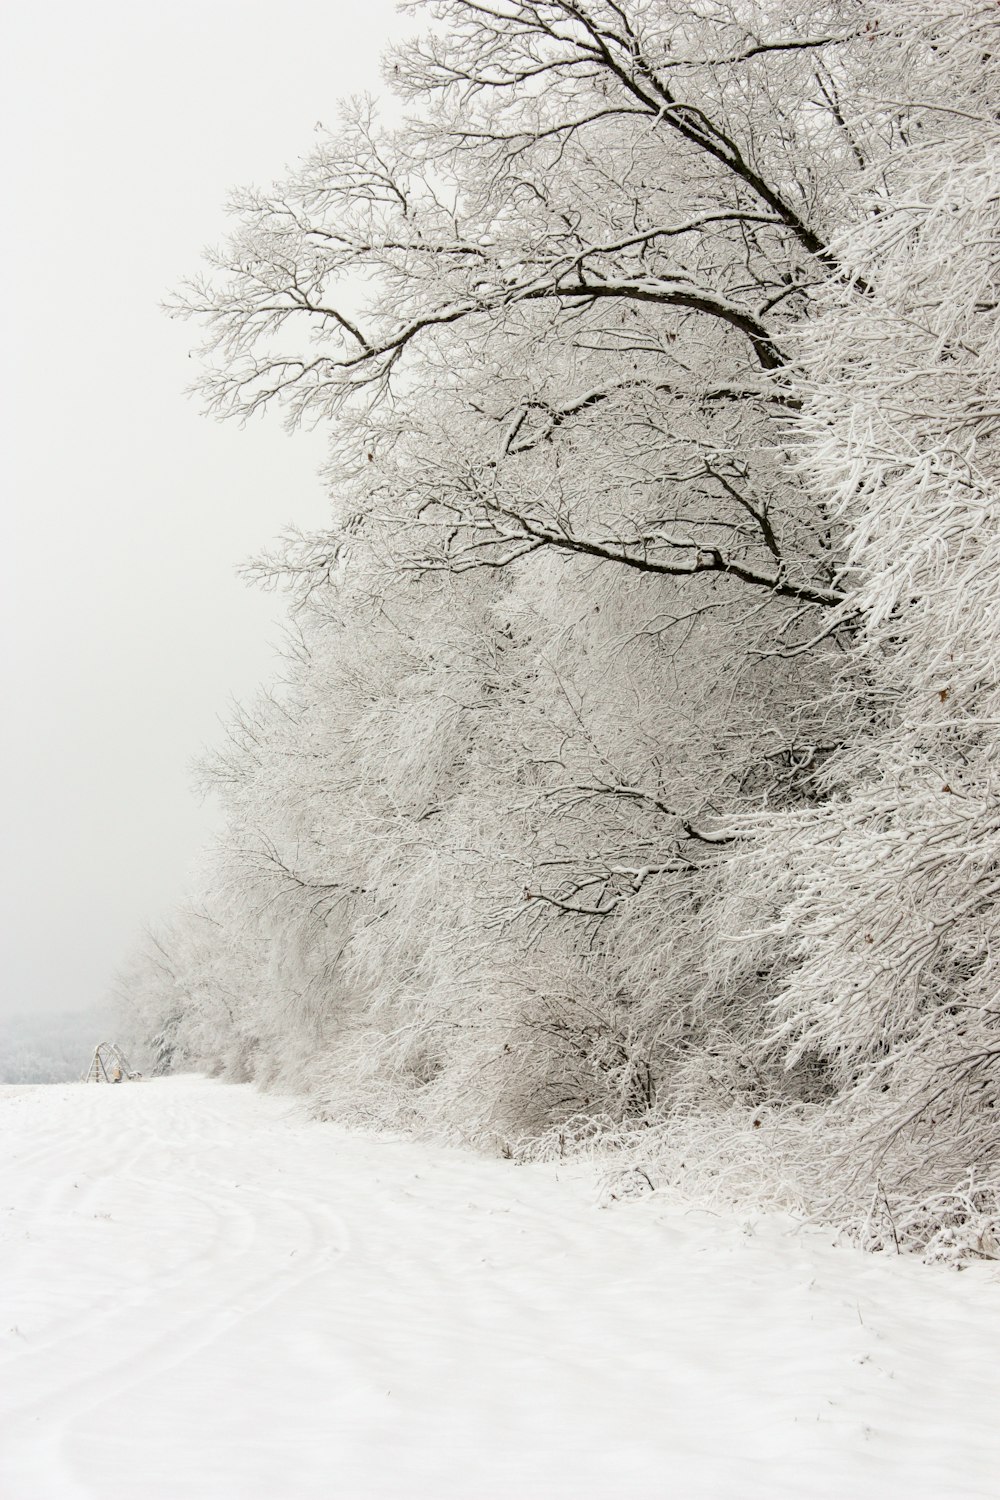 alberi spogli coperti di neve